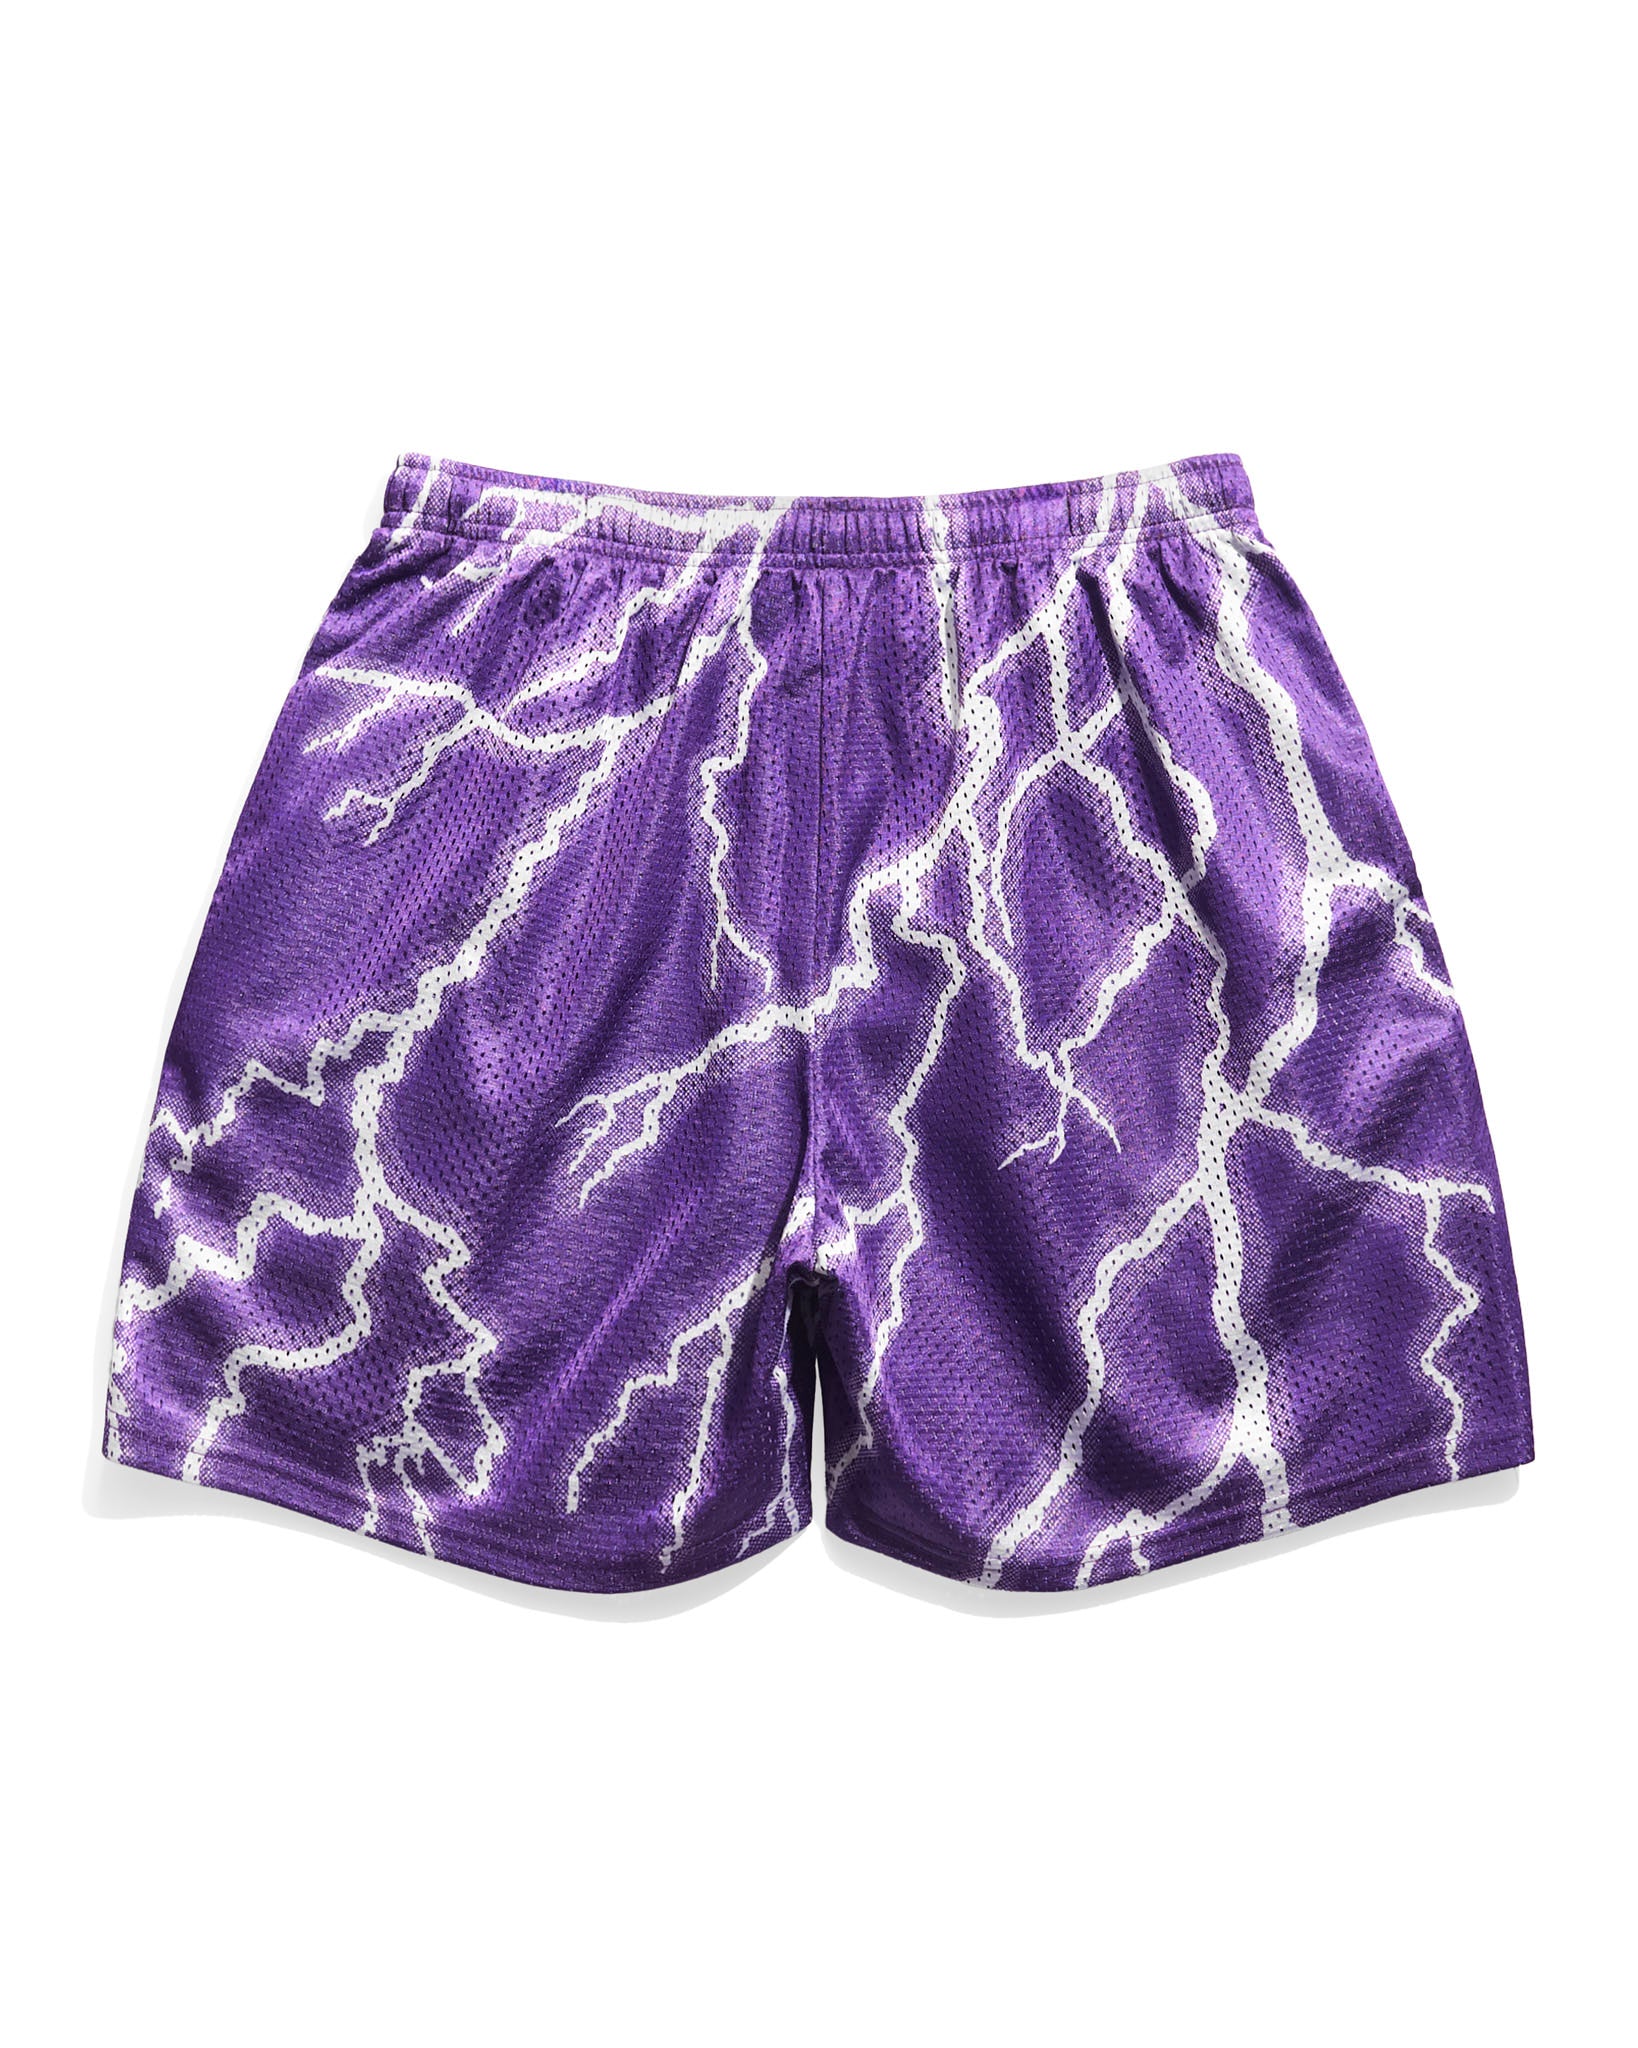 Men's Graphic Mesh Shorts - Purple Lightning